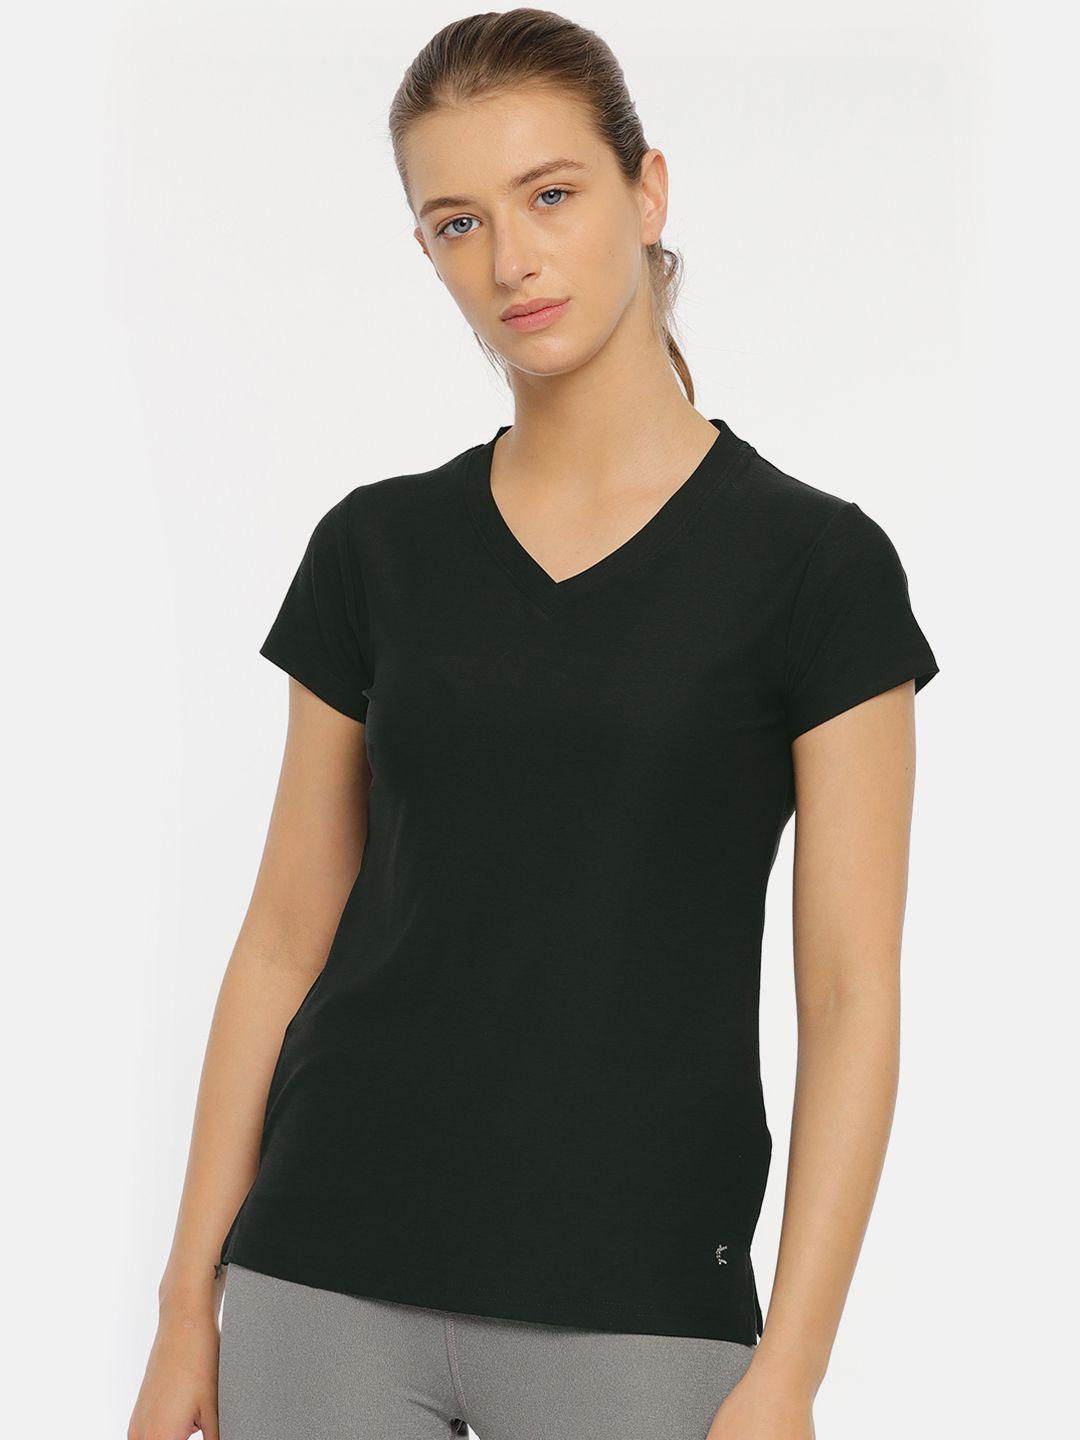 kanvin women black solid v-neck activewear t-shirt